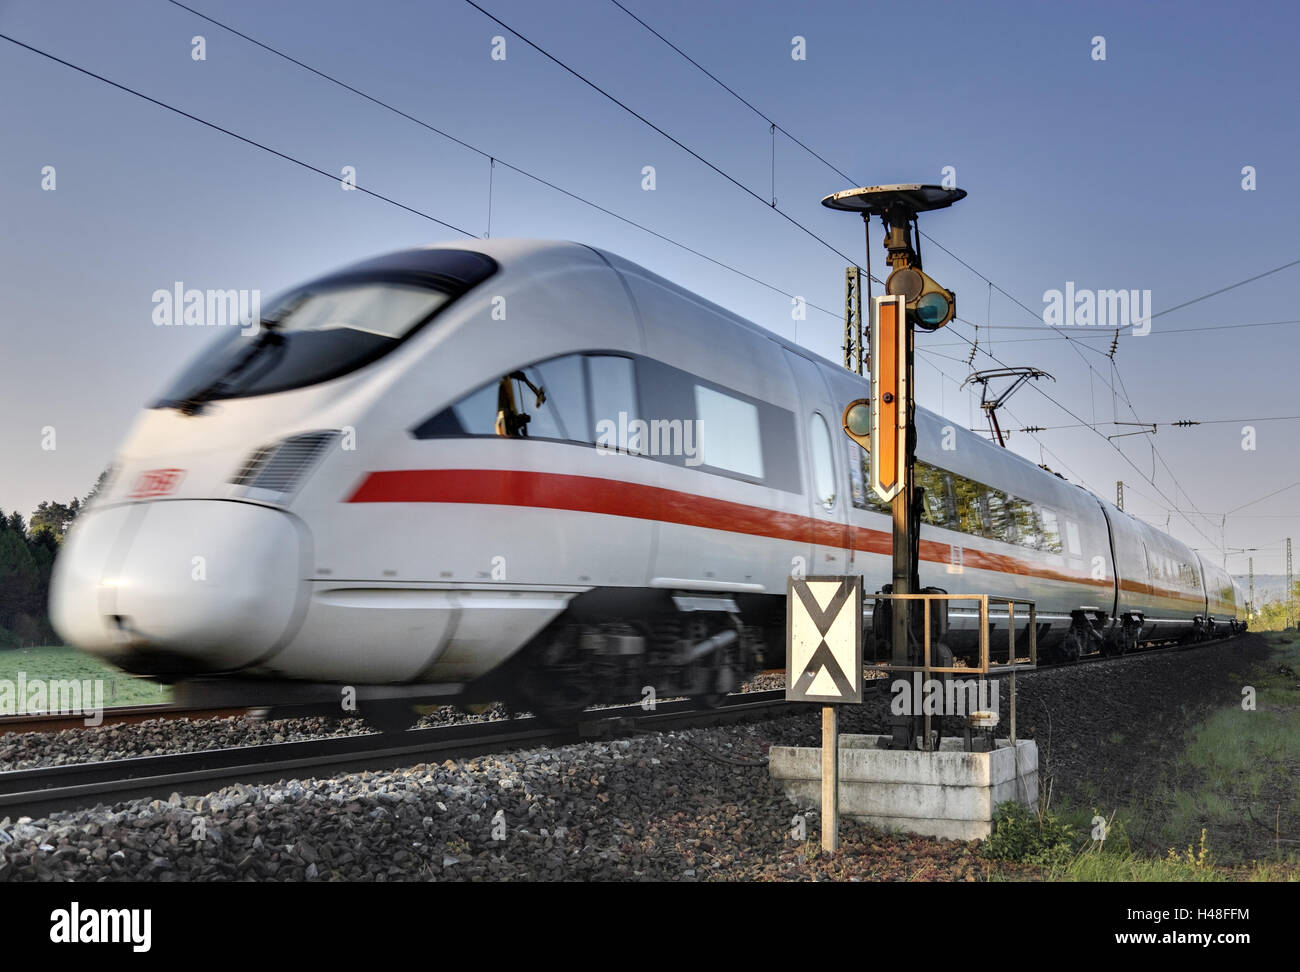 Train, intercity express, track, signal, blur, Stock Photo